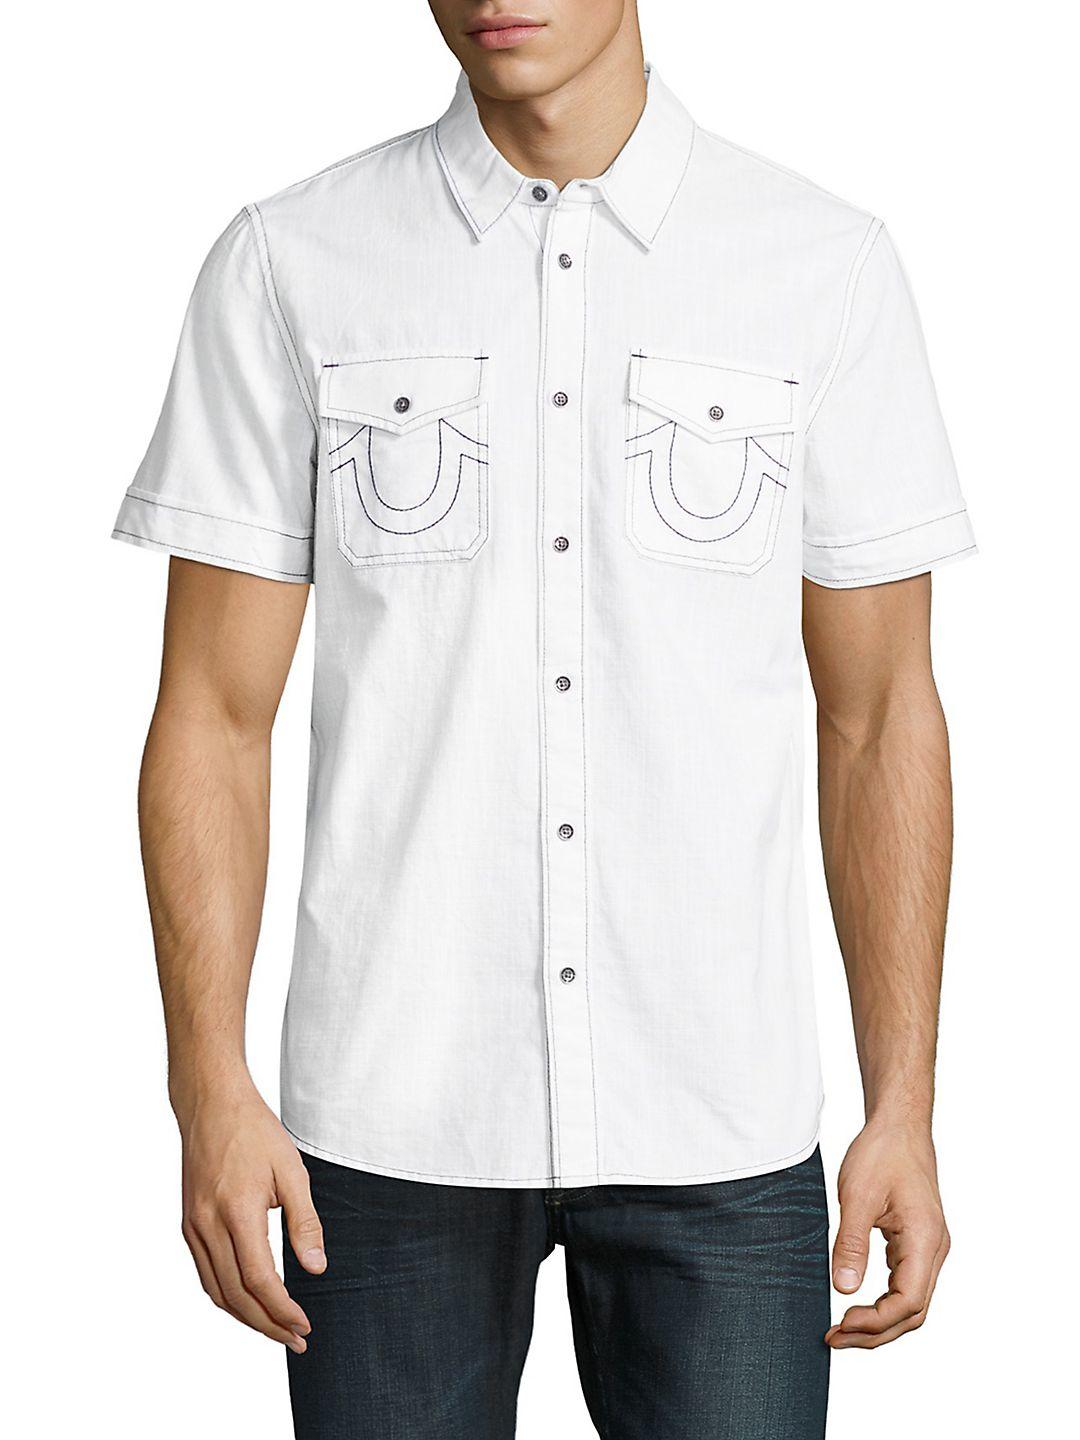 true religion button down shirts